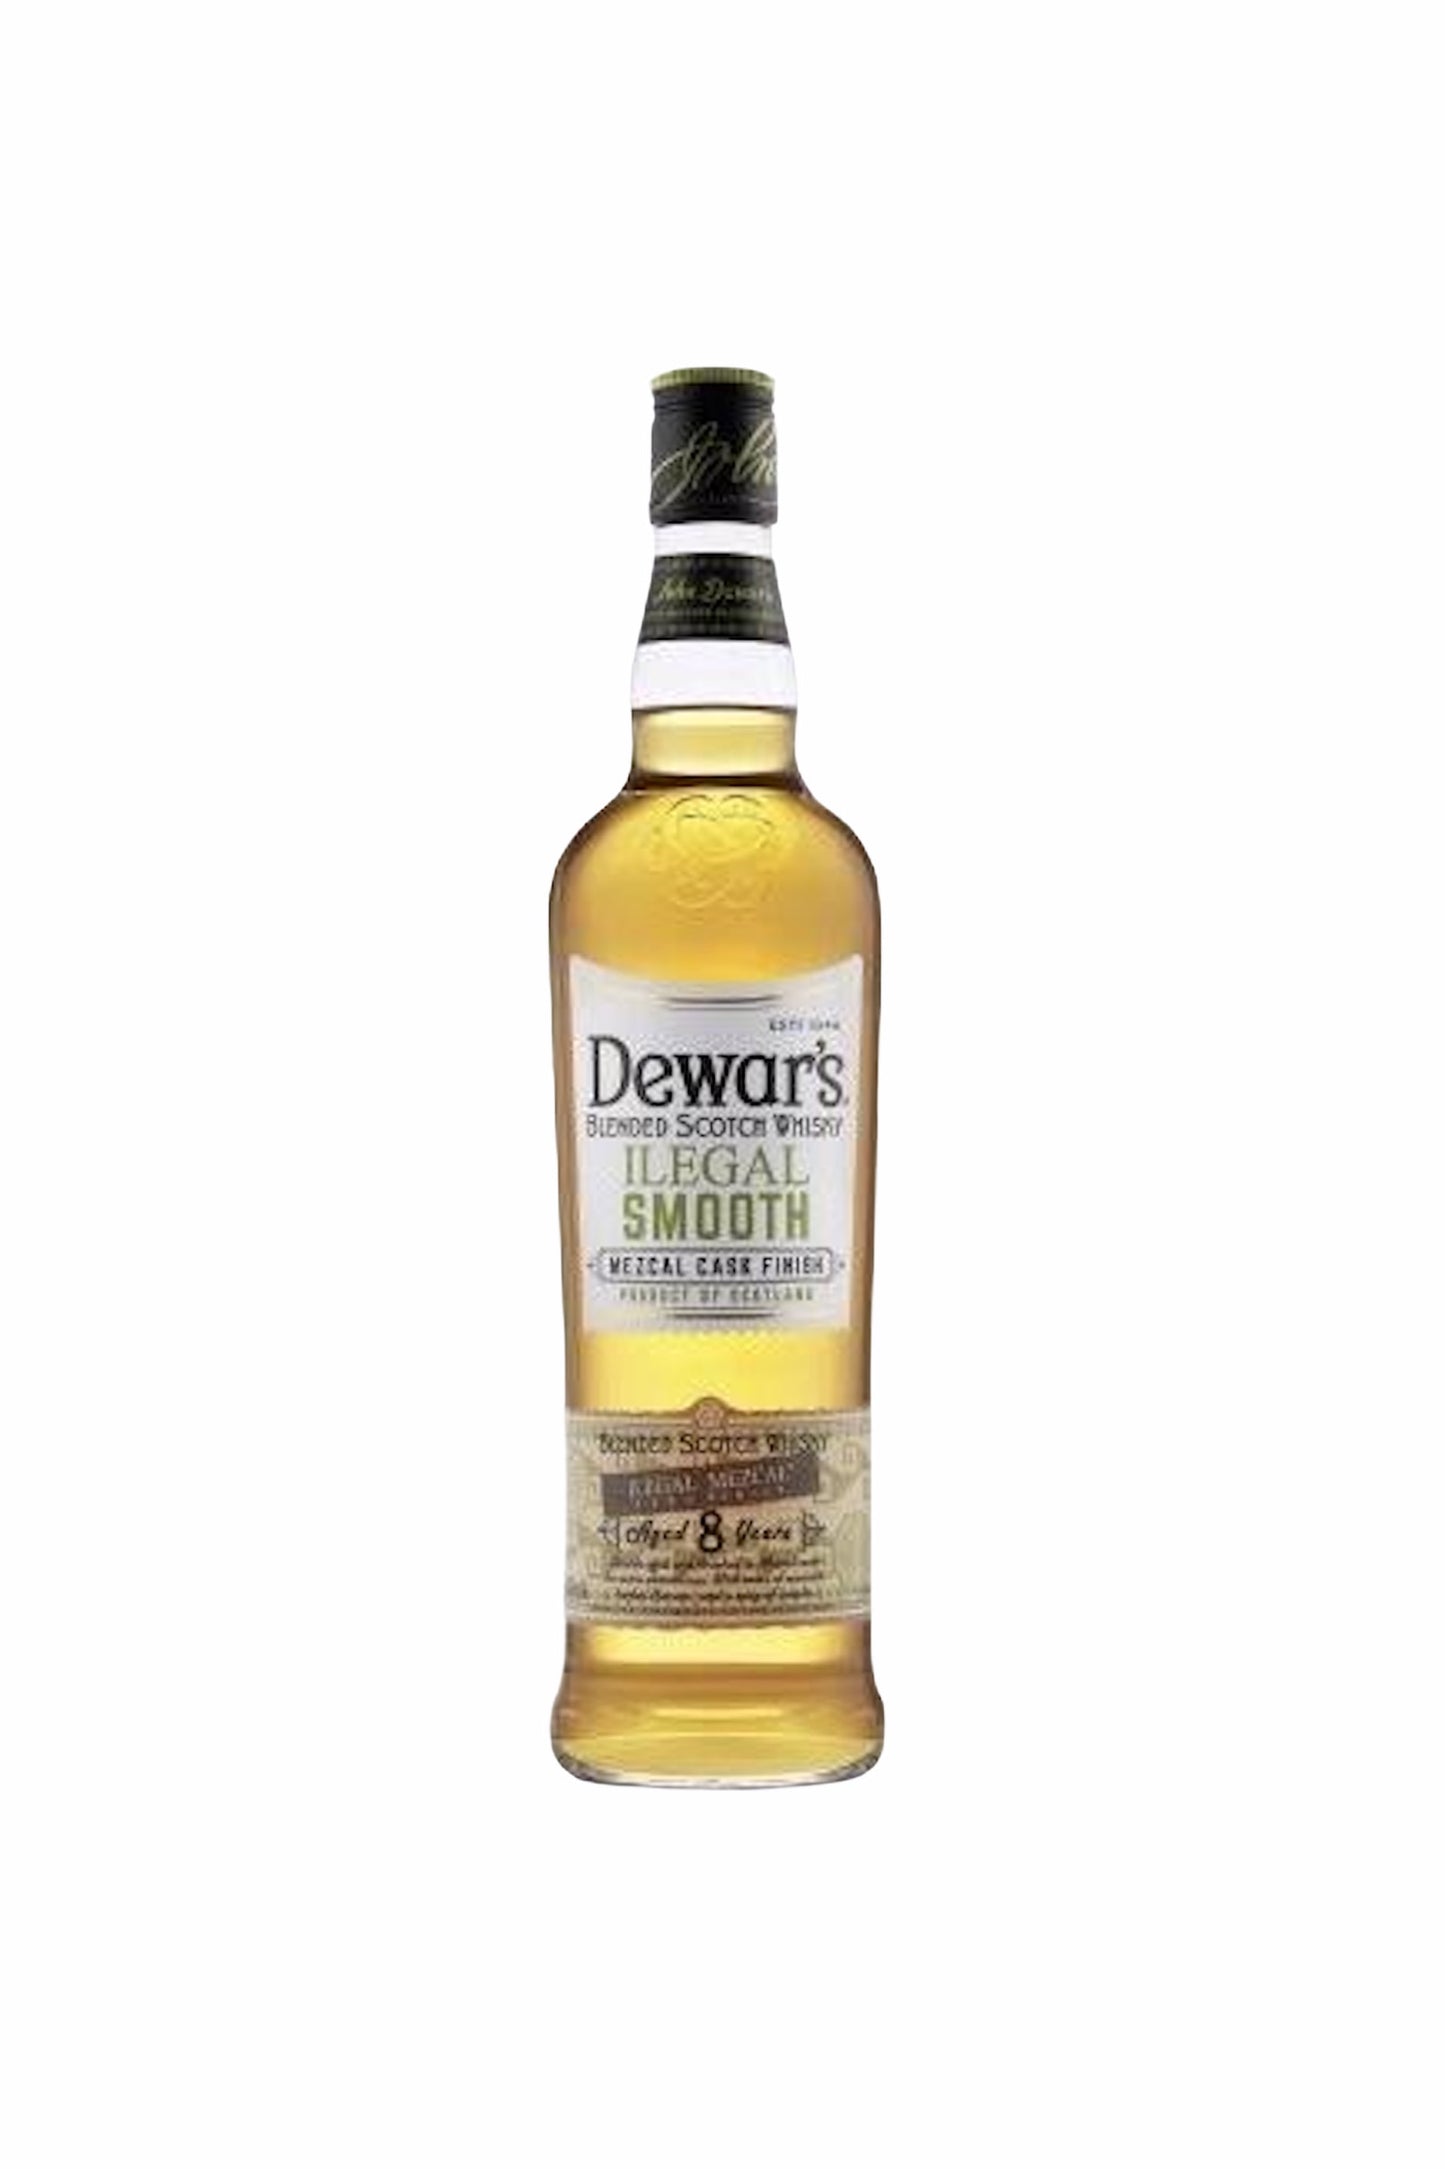 Dewar's Ilegal Smooth Mezcal Cask Finish 8 Year Old Blended Scotch Whisky 750ml